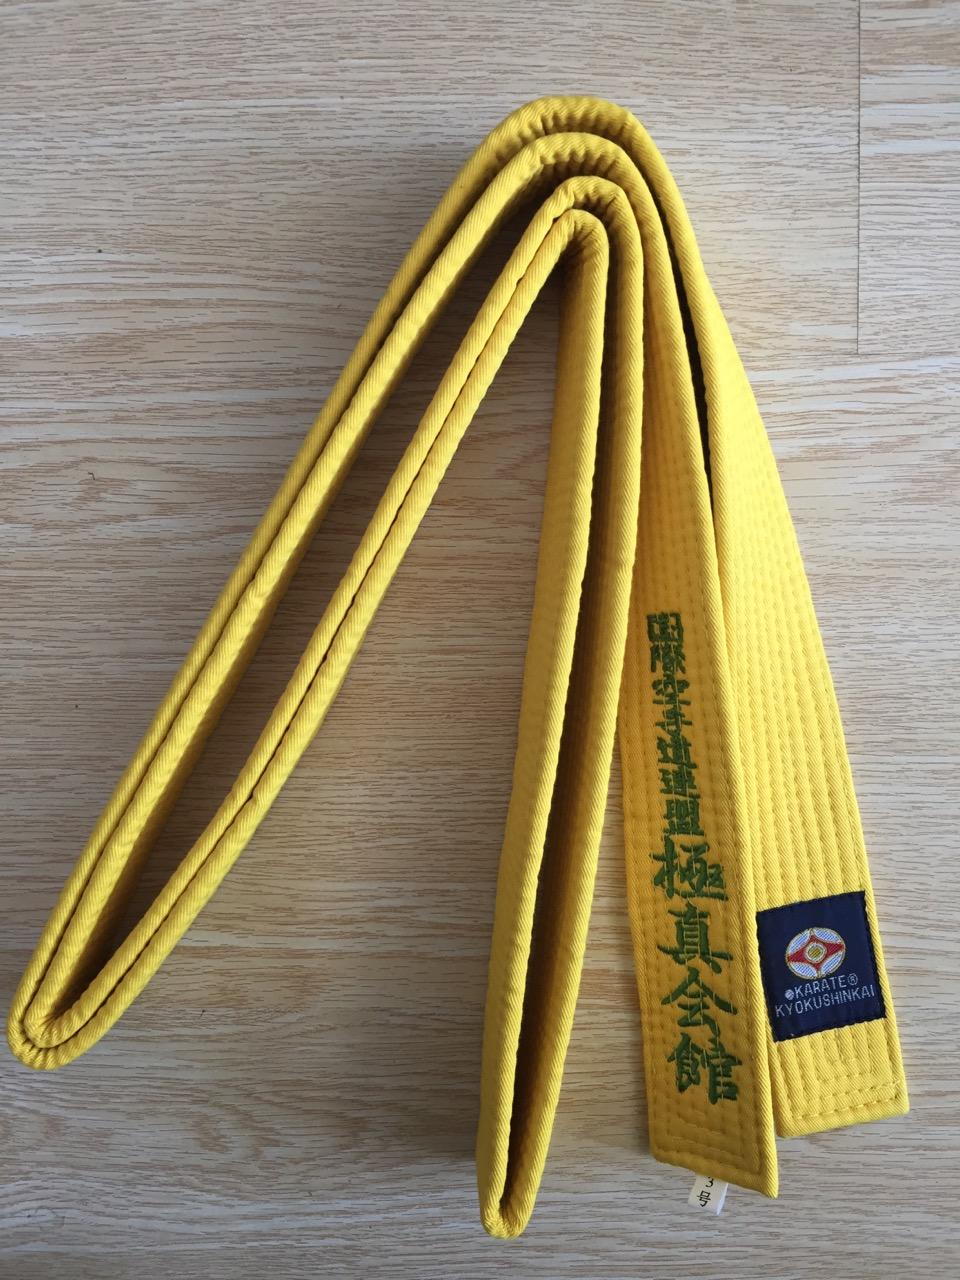 Kyokushin Karate color belt - 1002 (China Manufacturer) - Martial Arts